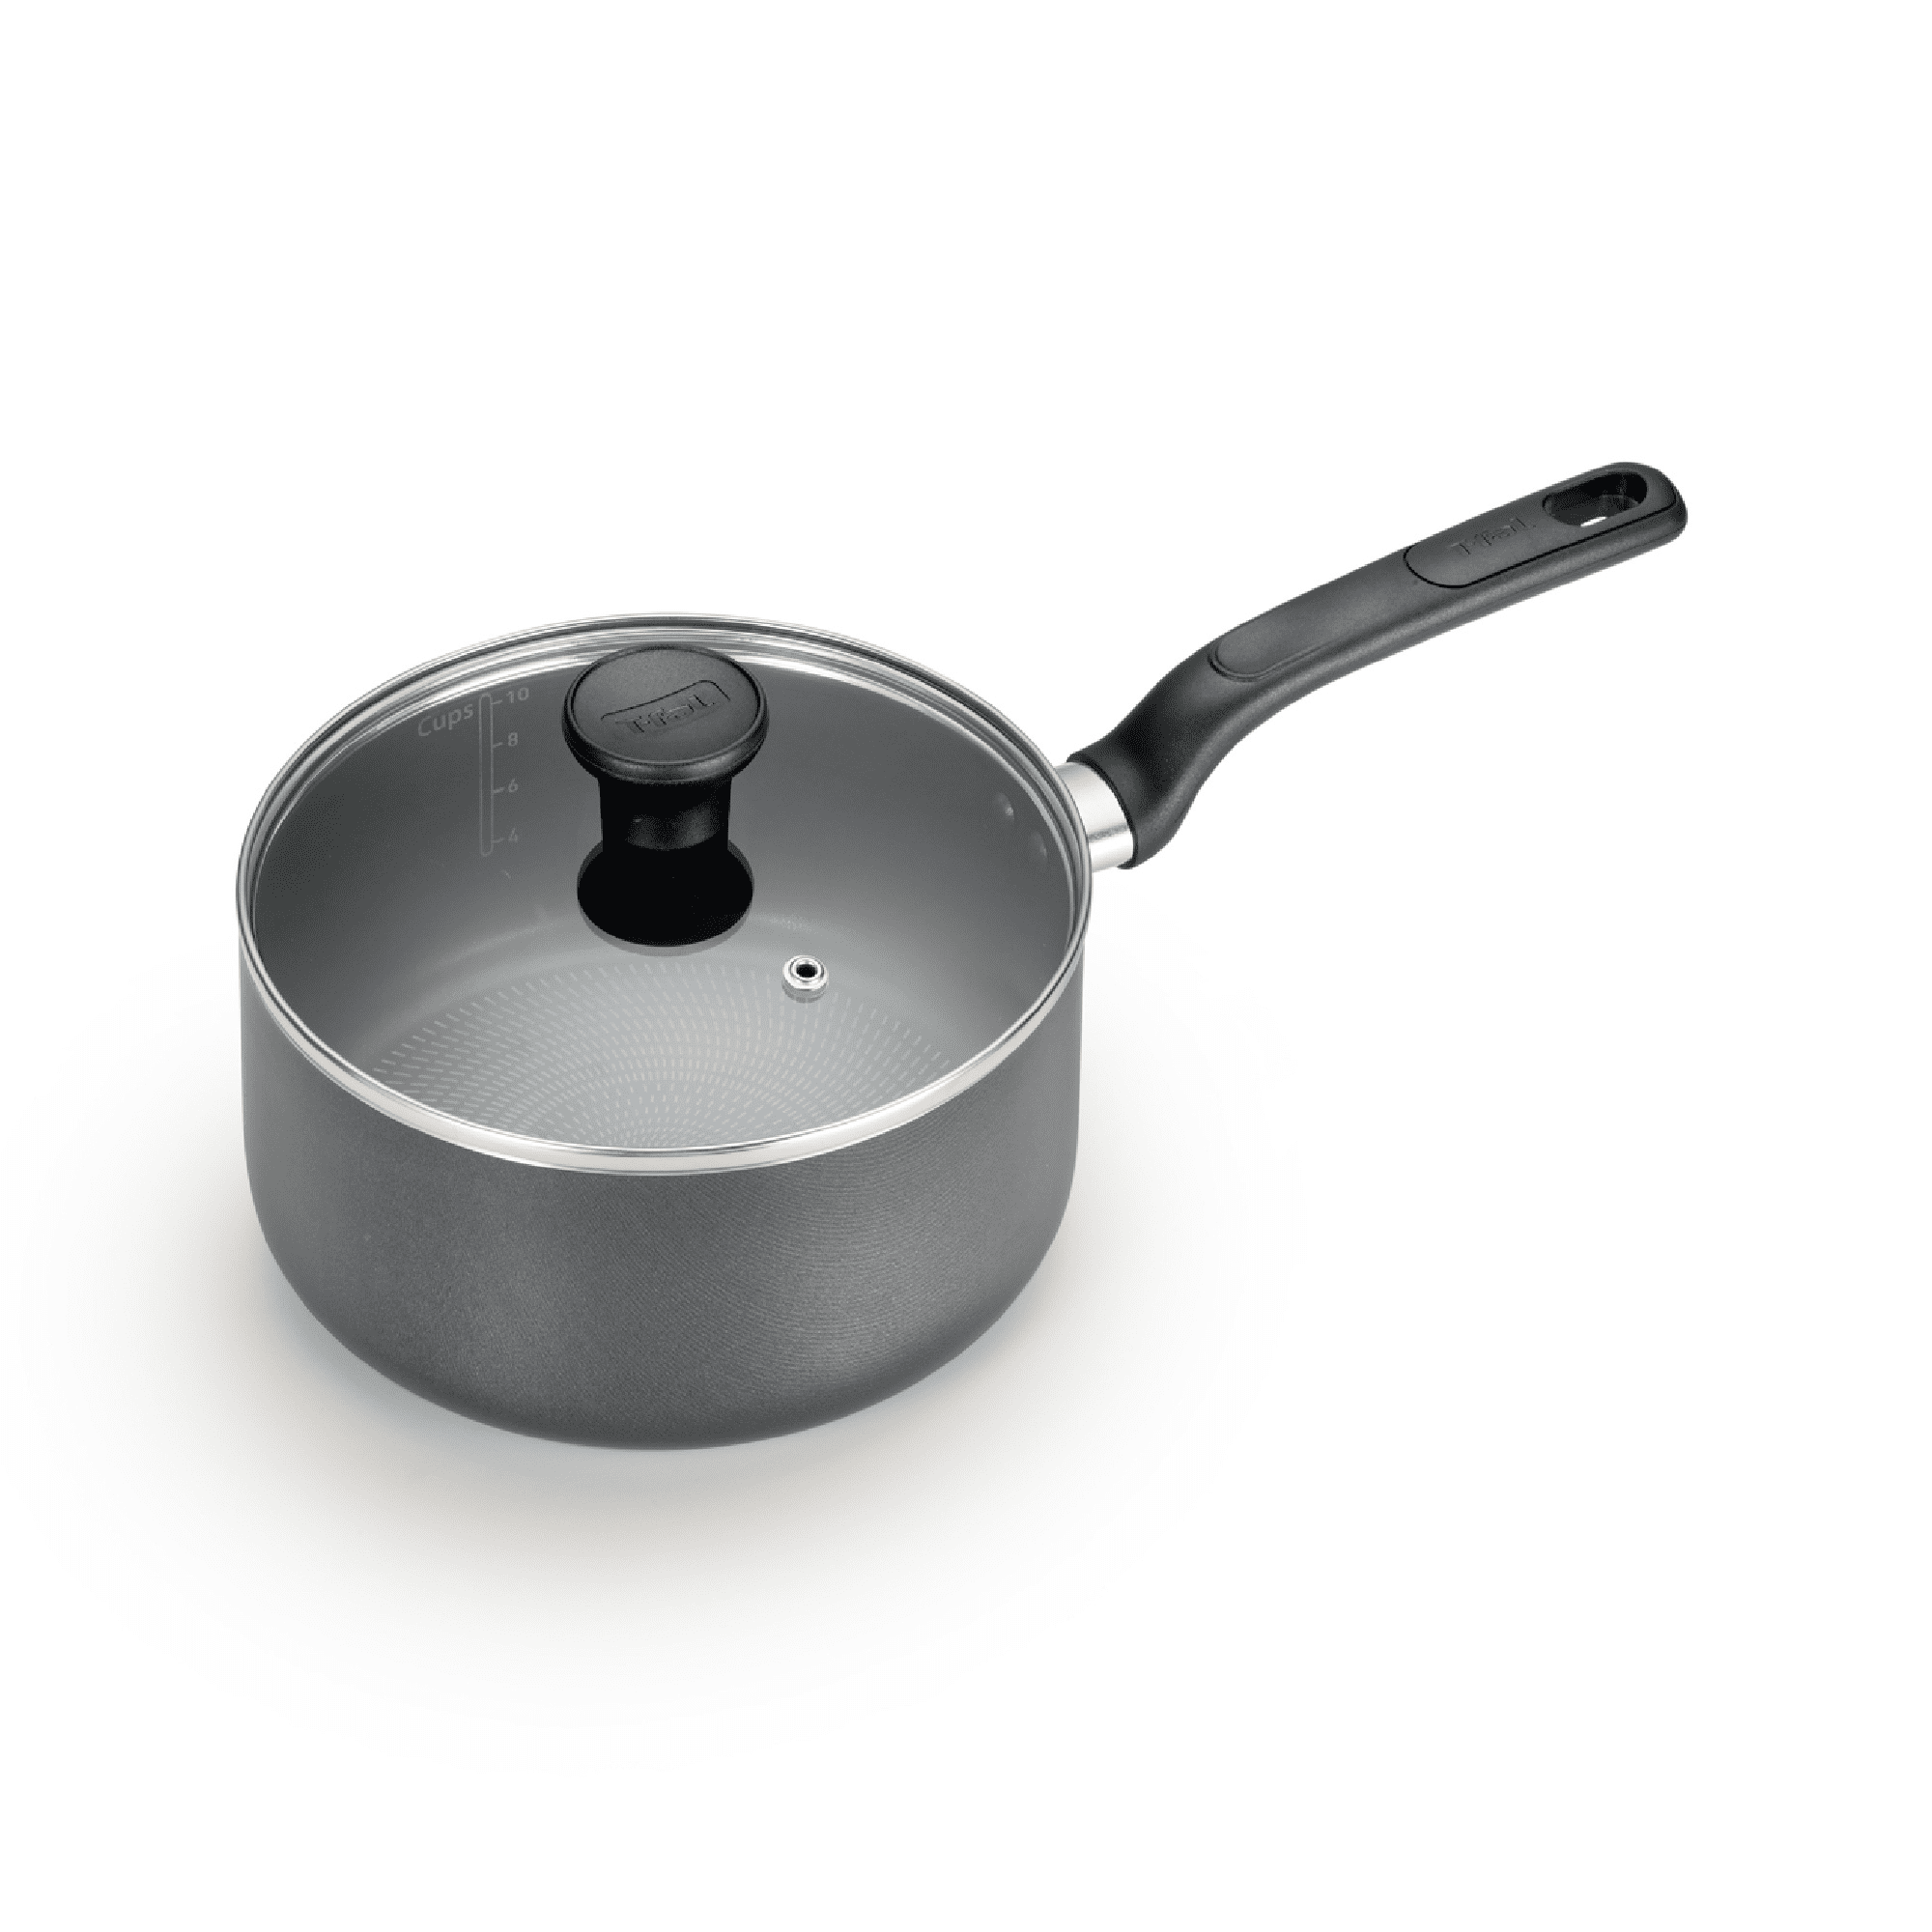 Details about   Carote 1.5-Quart Sauce Pan with Glass Lid,Soup Pot Nonstick Saucepan Granite Coa